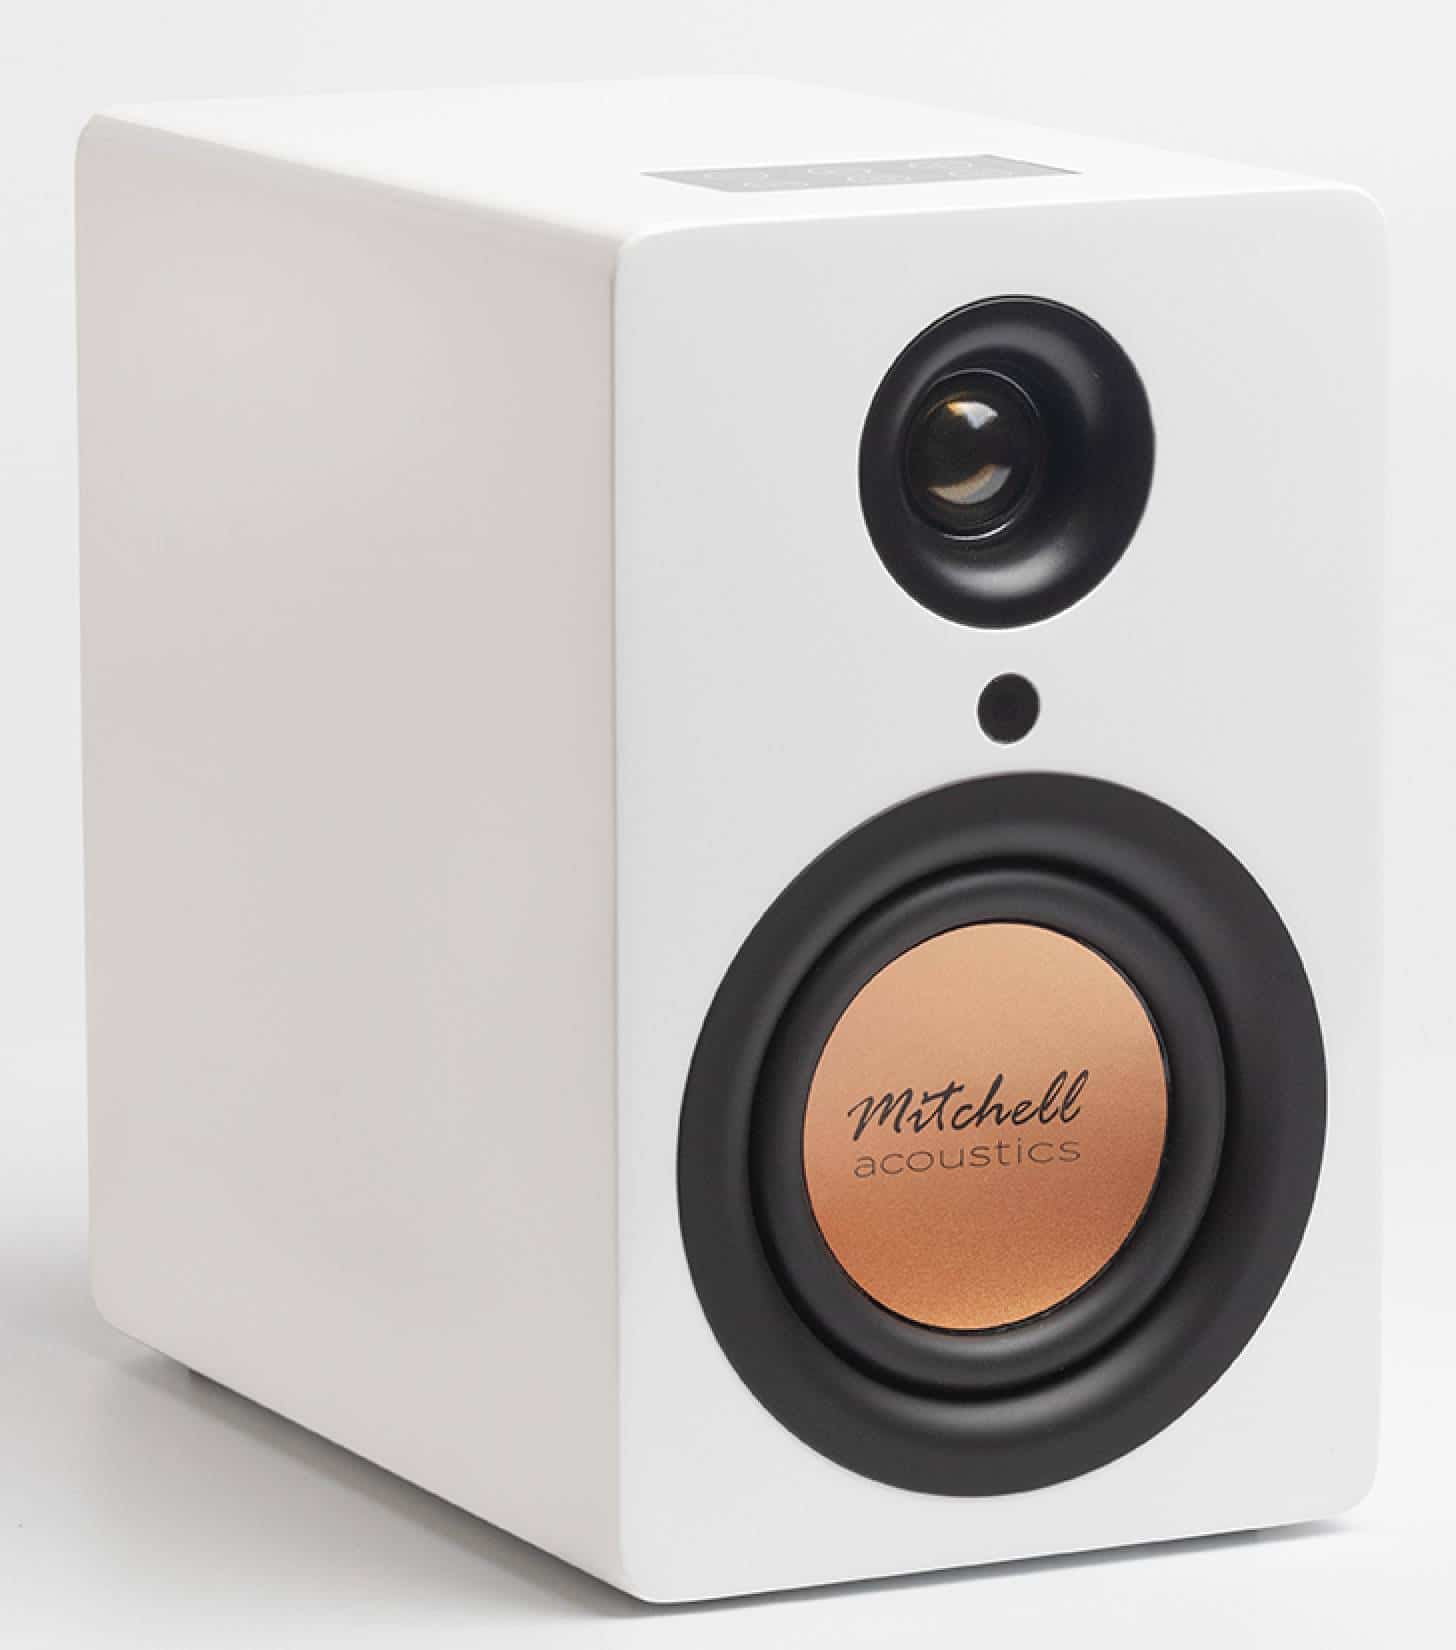 uStream One Wireless Speaker from Mitchell Acoustics